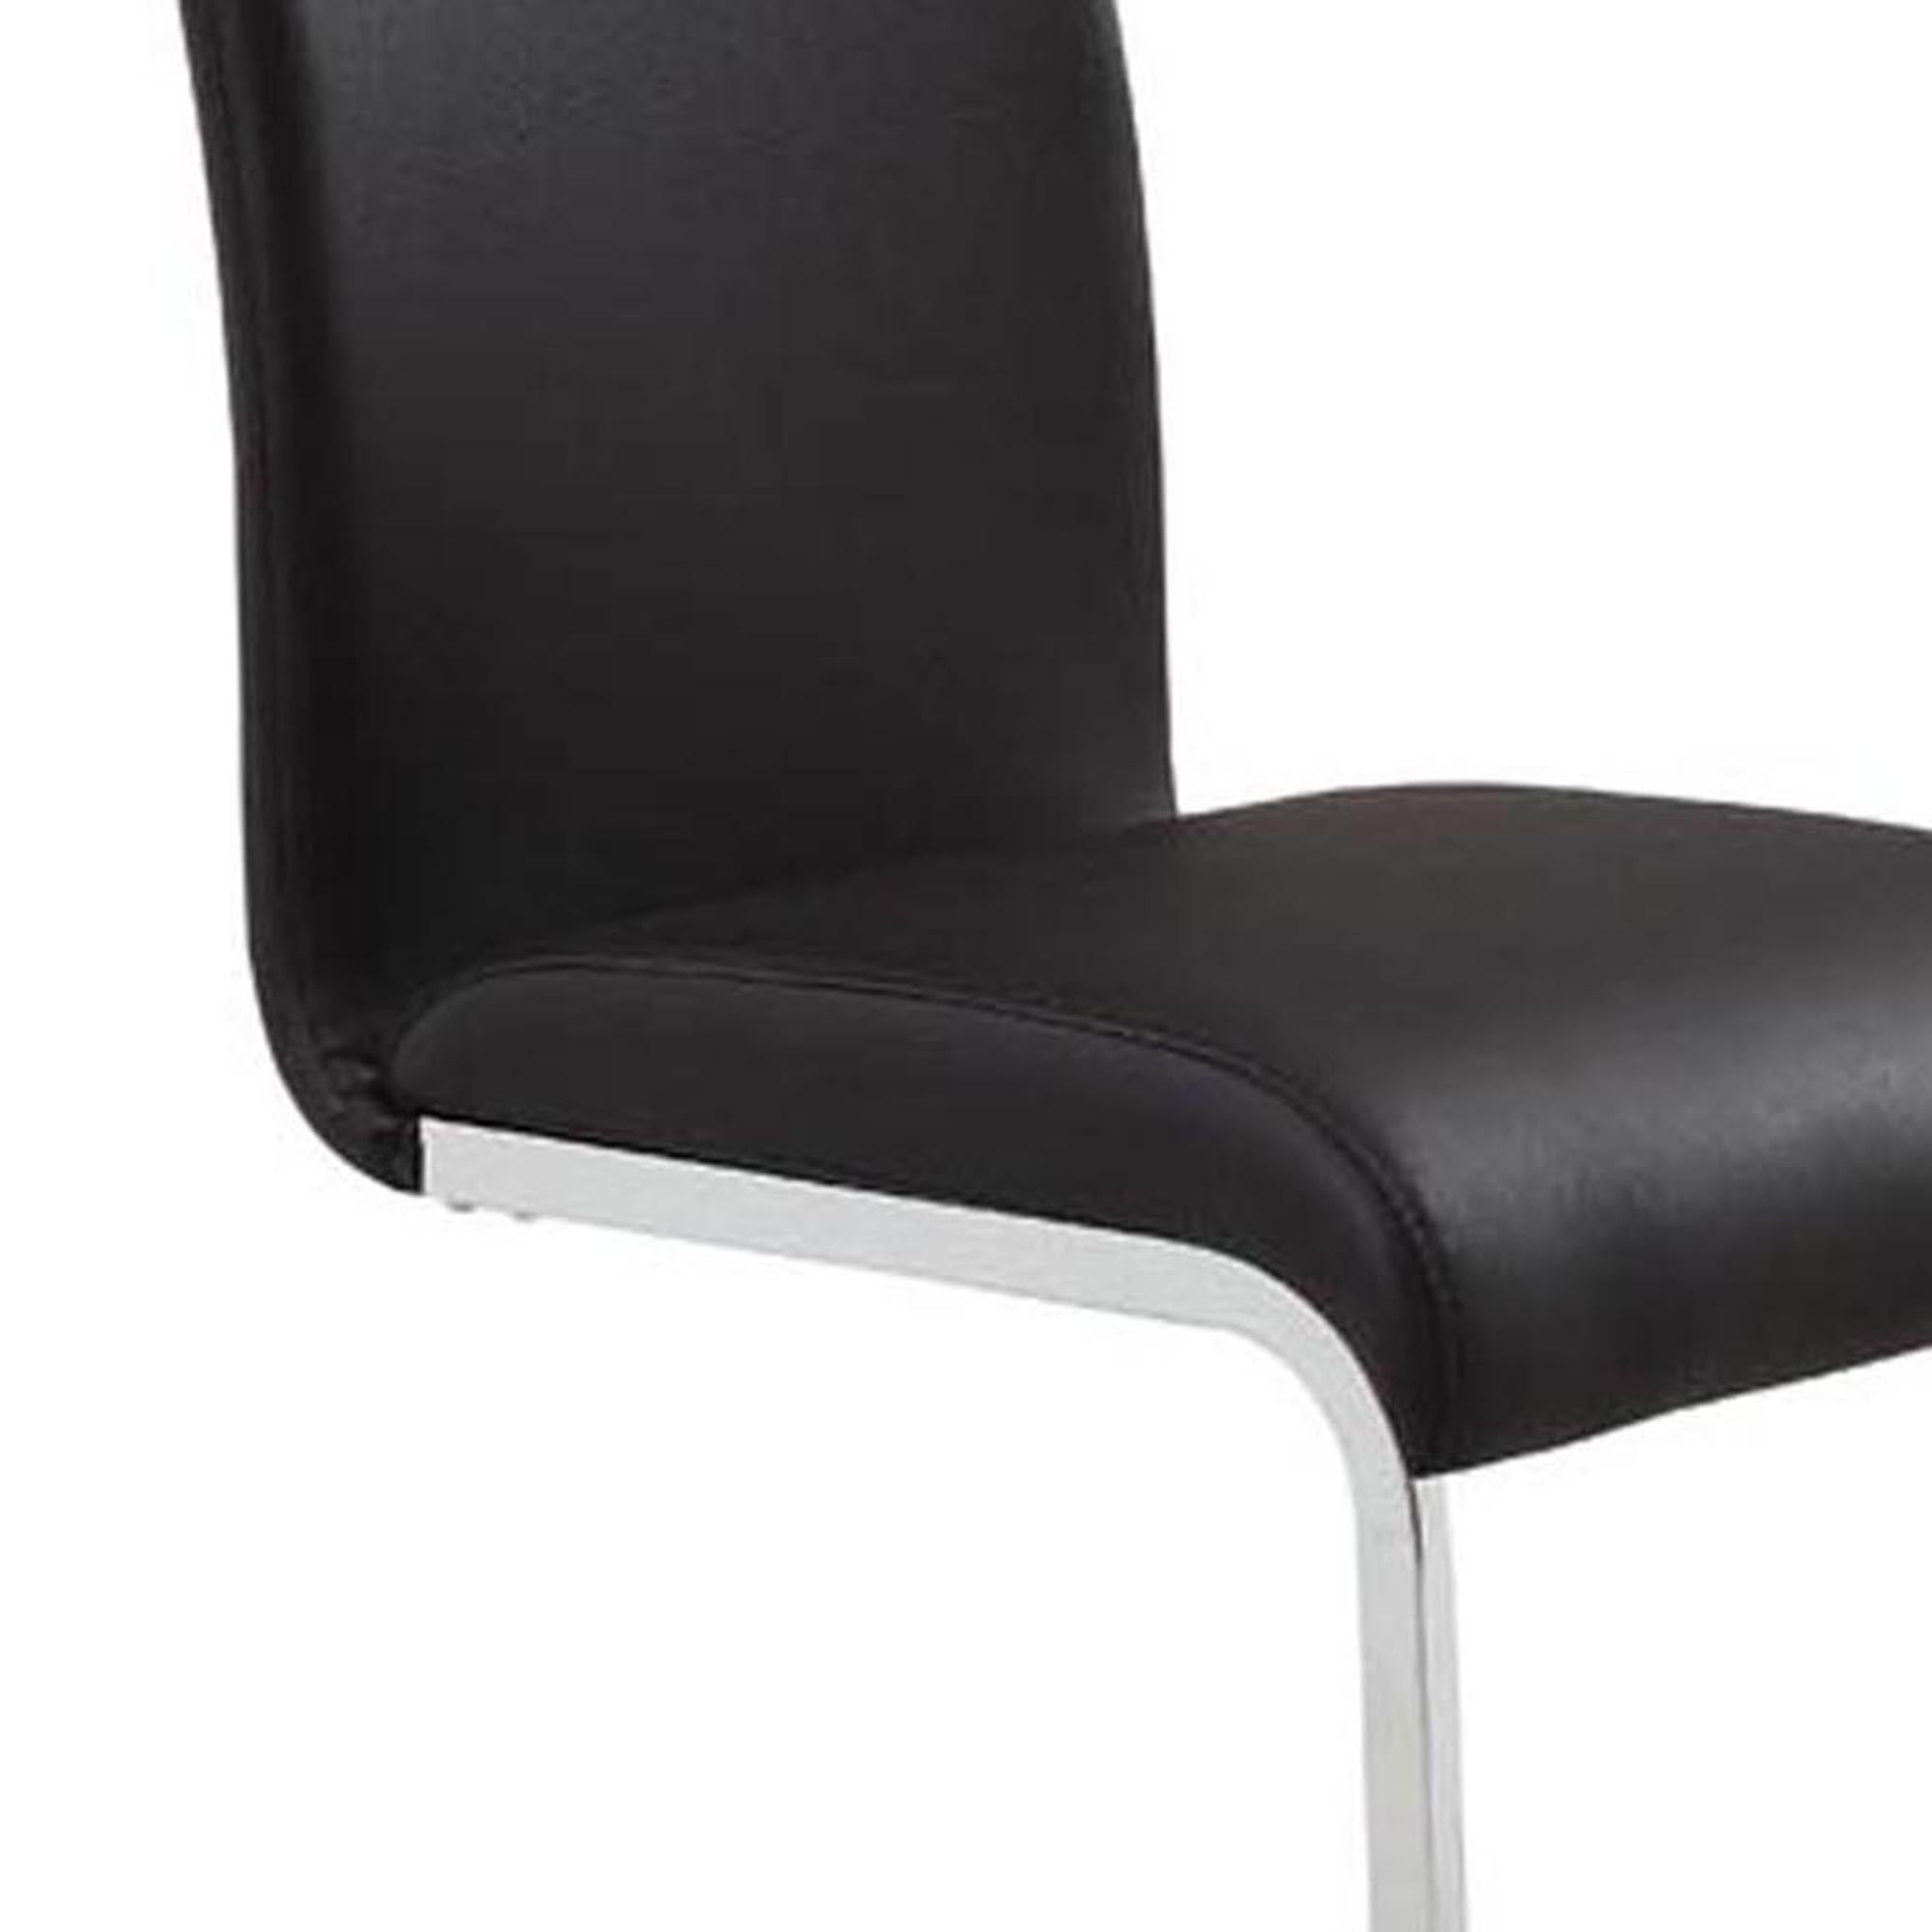 Solara/Maxim 5pc Dining Set in Chrome with Black Chair